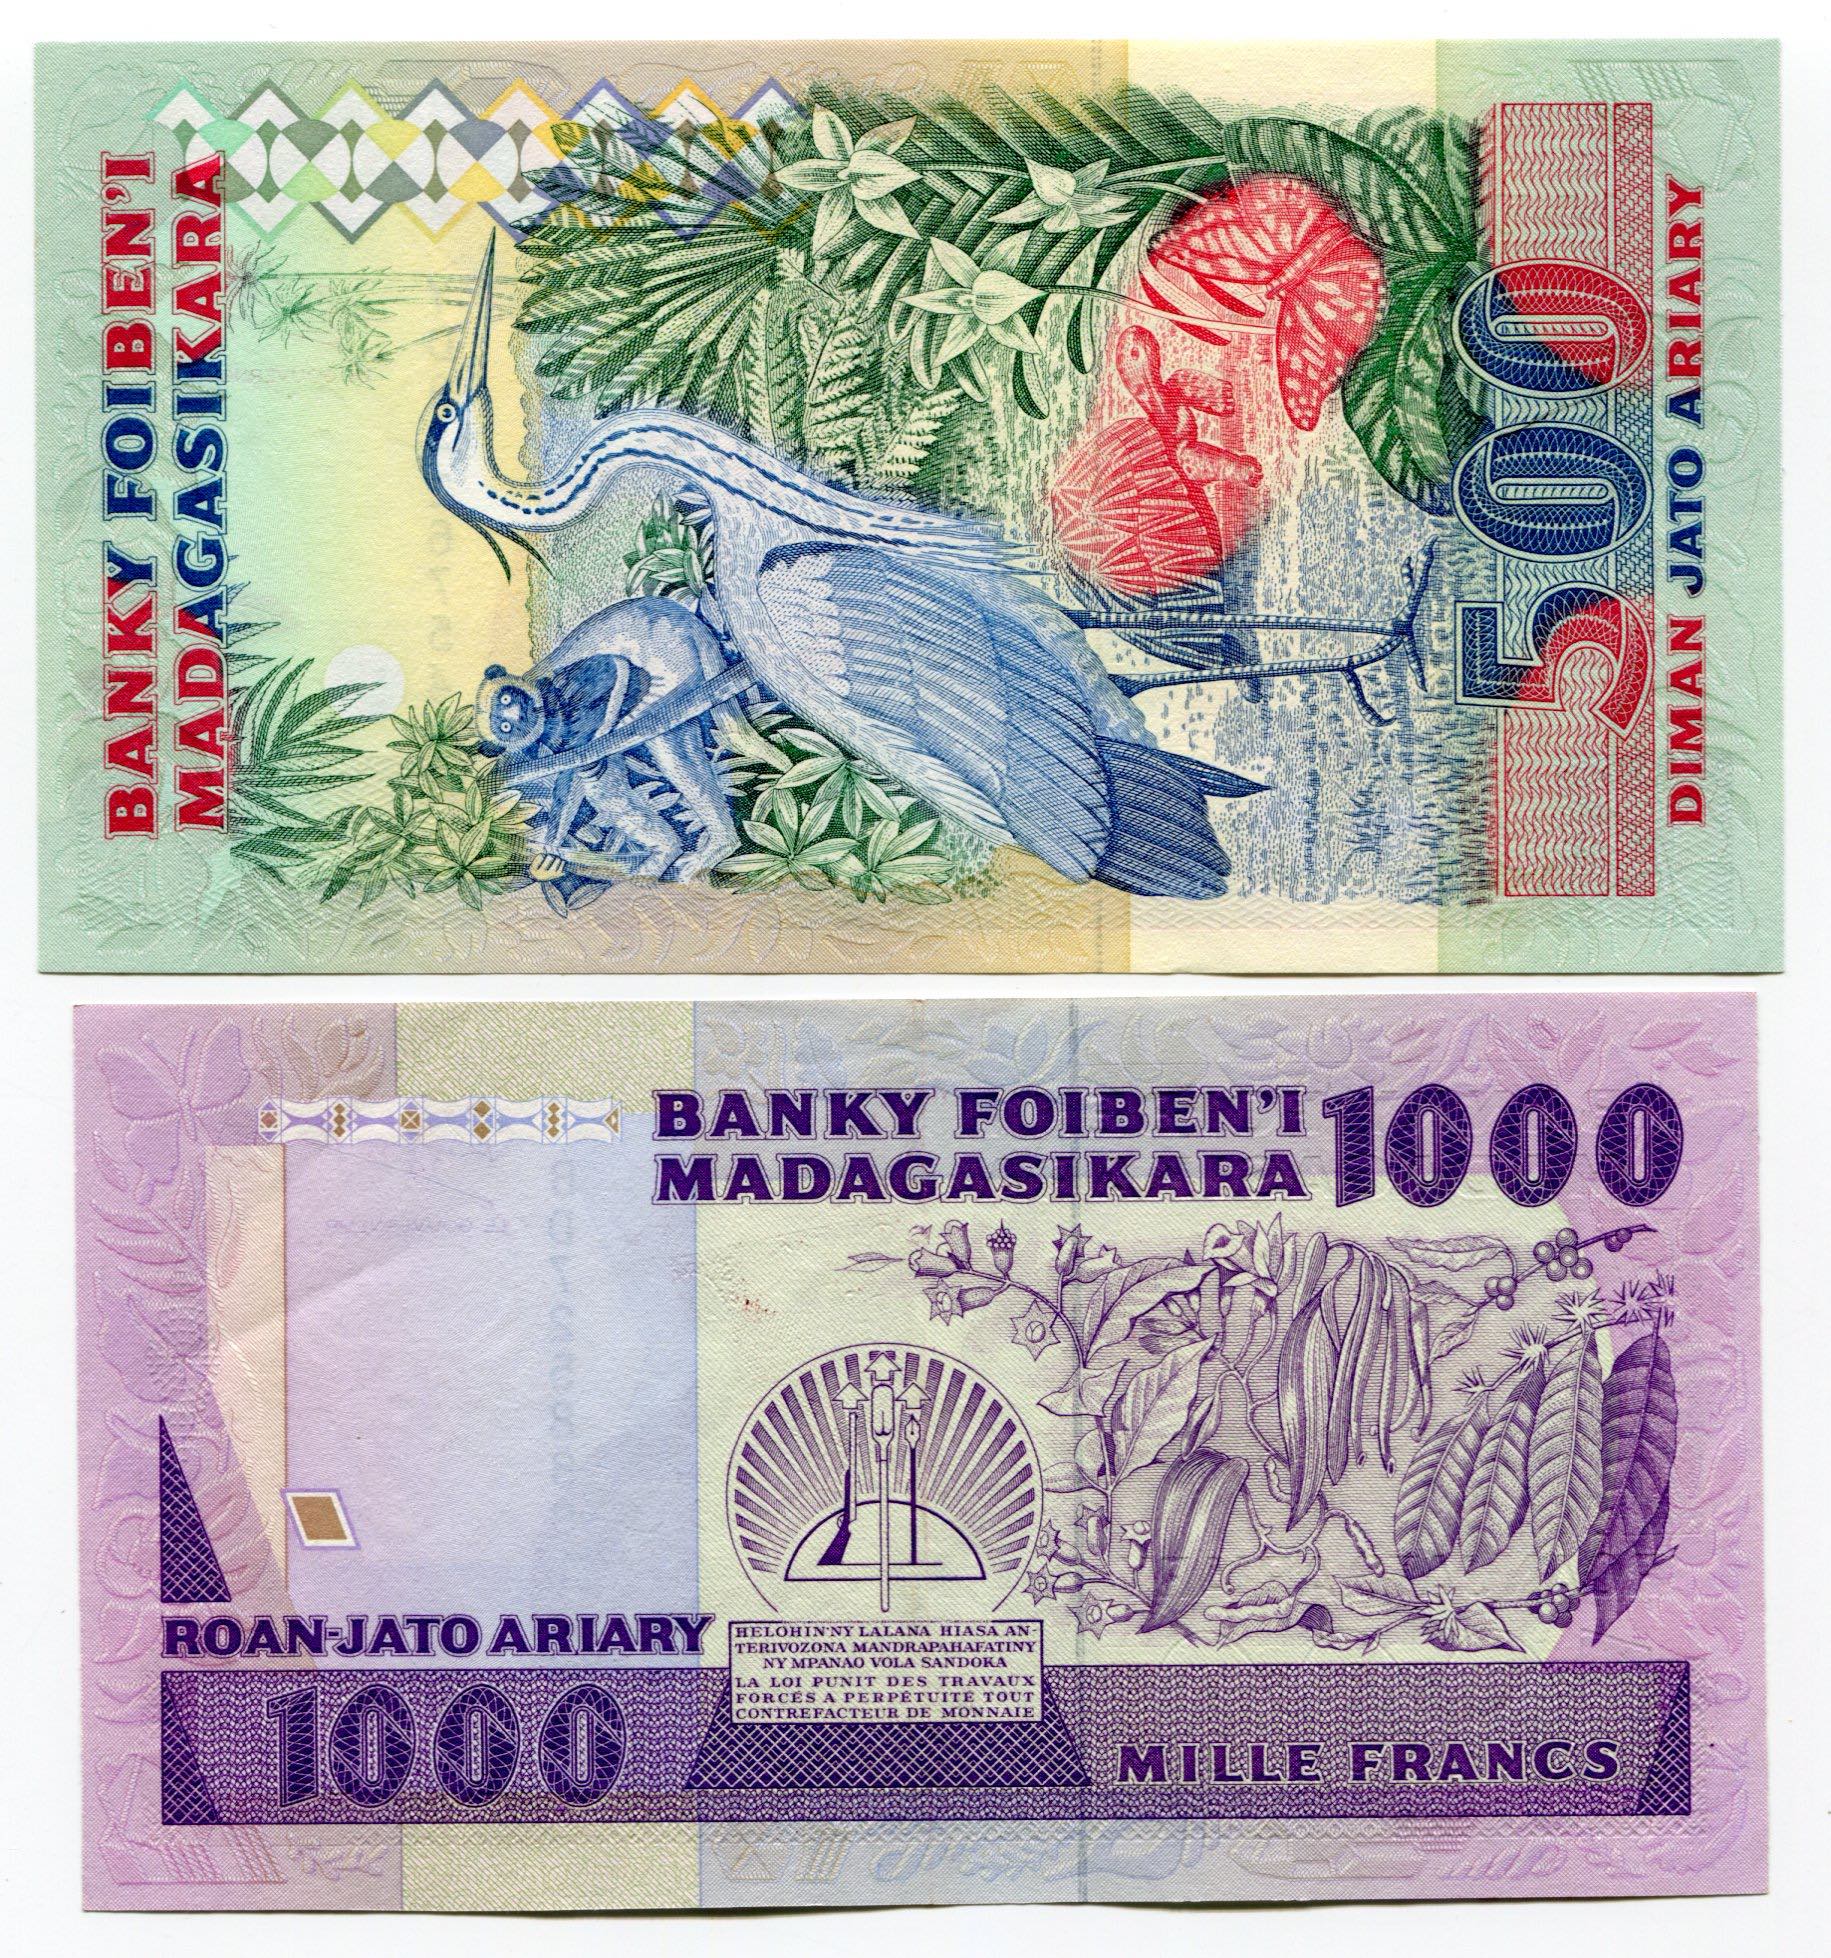 Madagascar 1000 Francs - 2500 Francs 1988 -93